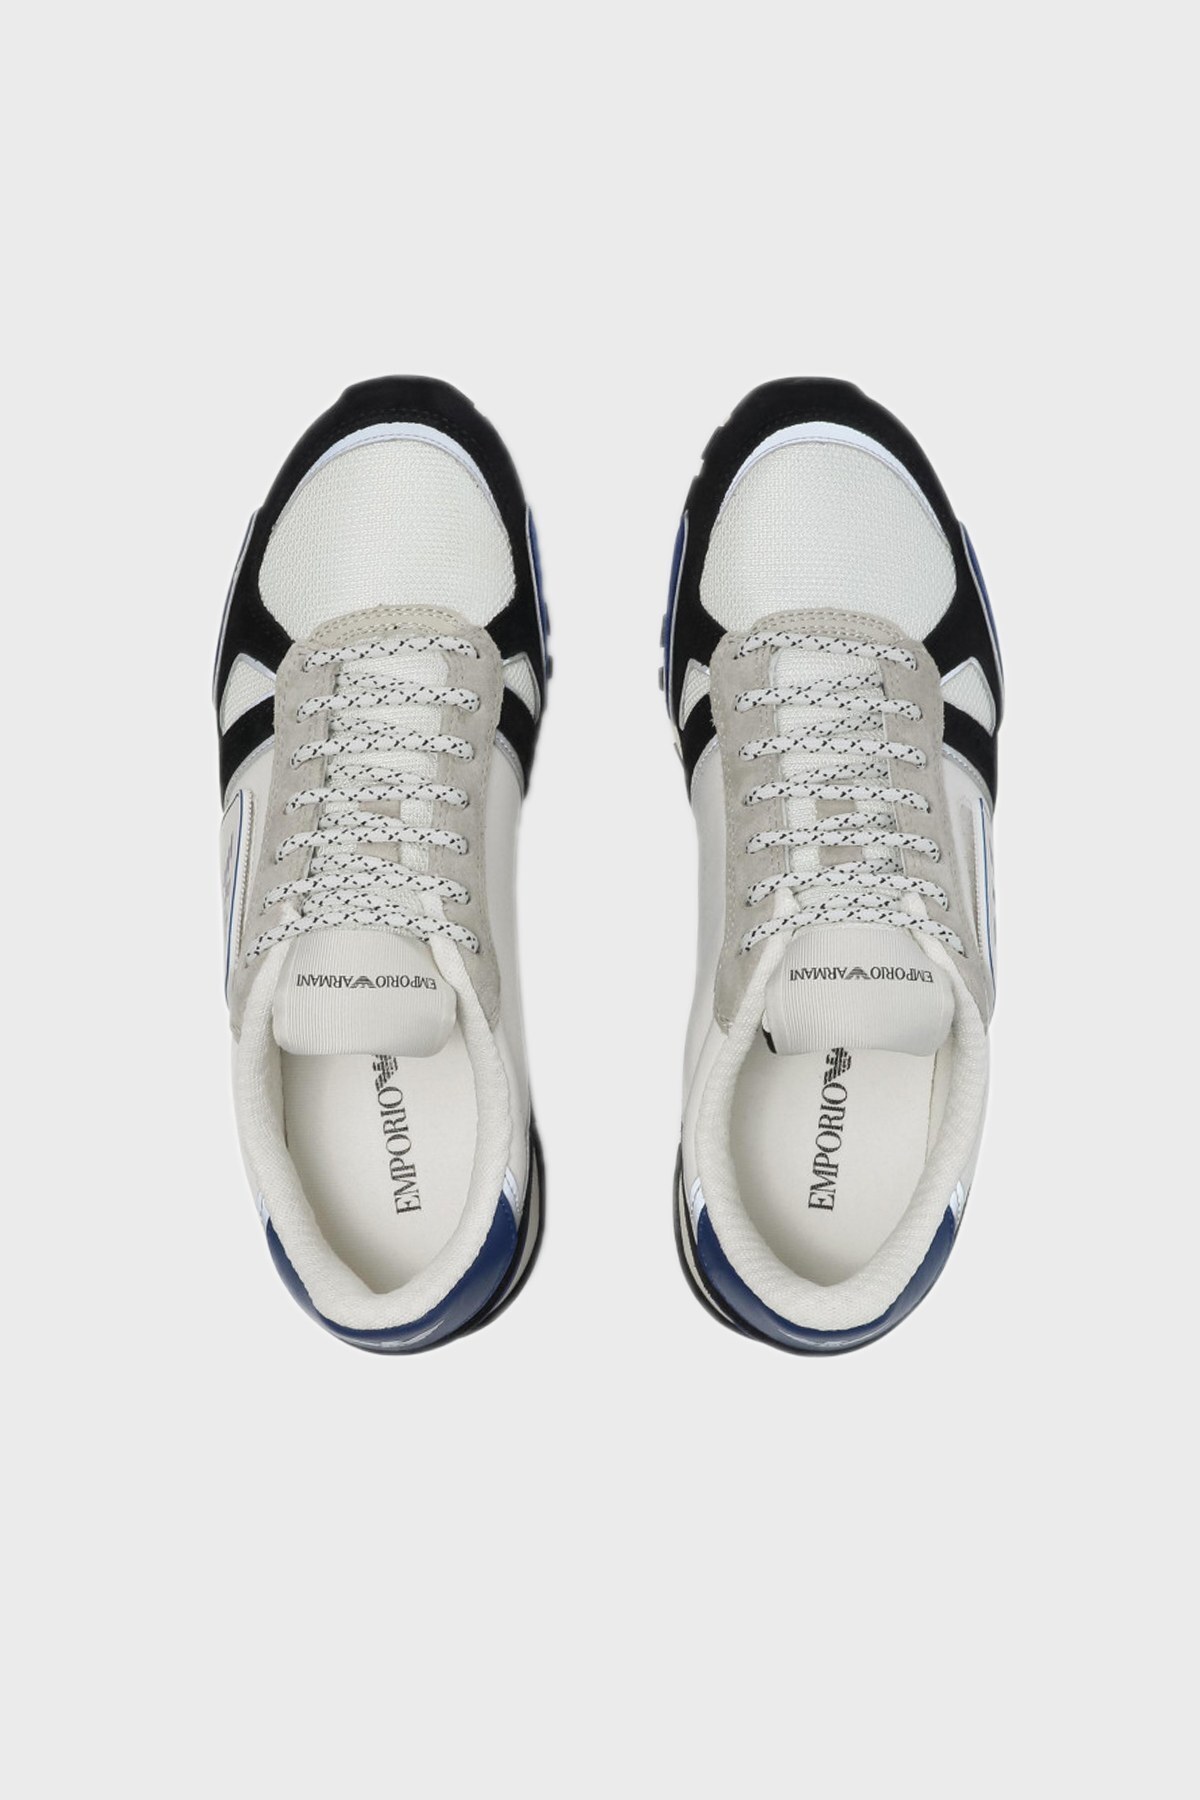 Emporio Armani Logolu Sneaker Erkek Ayakkabı X4X542 XM707 Q037 BEYAZ-SİYAH